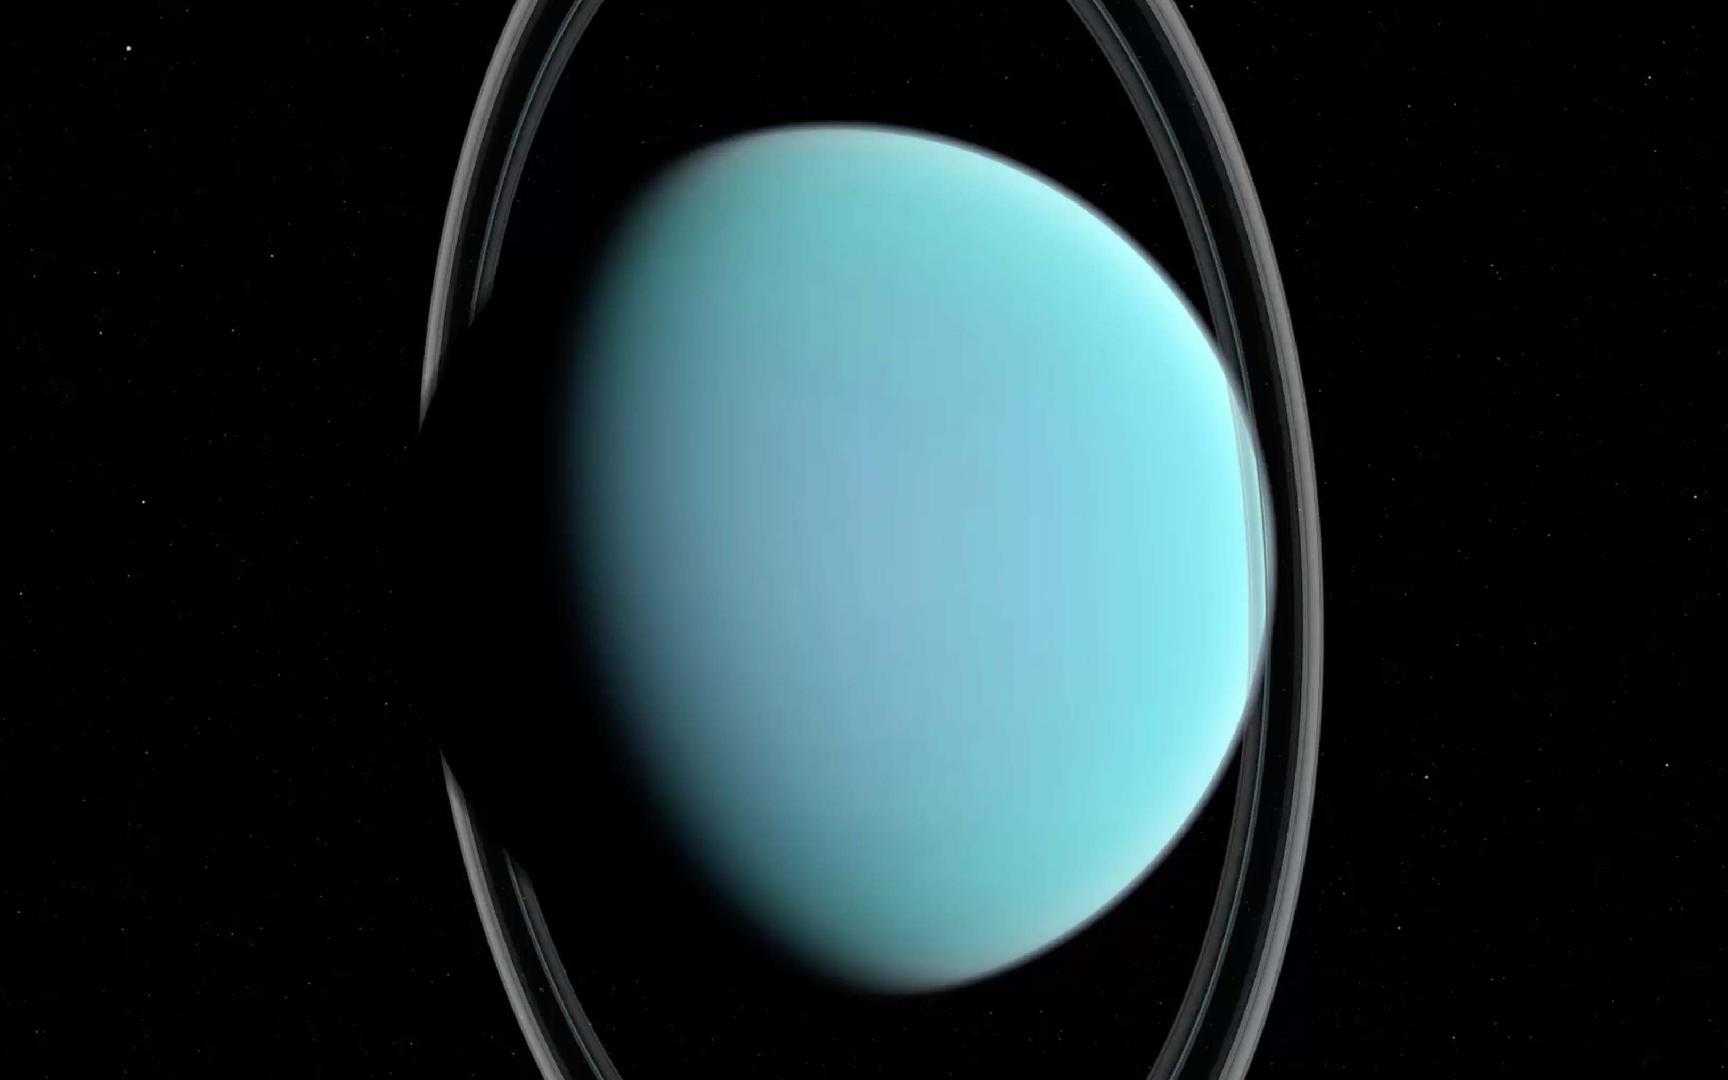 Spot the planet Uranus without binoculars tonight